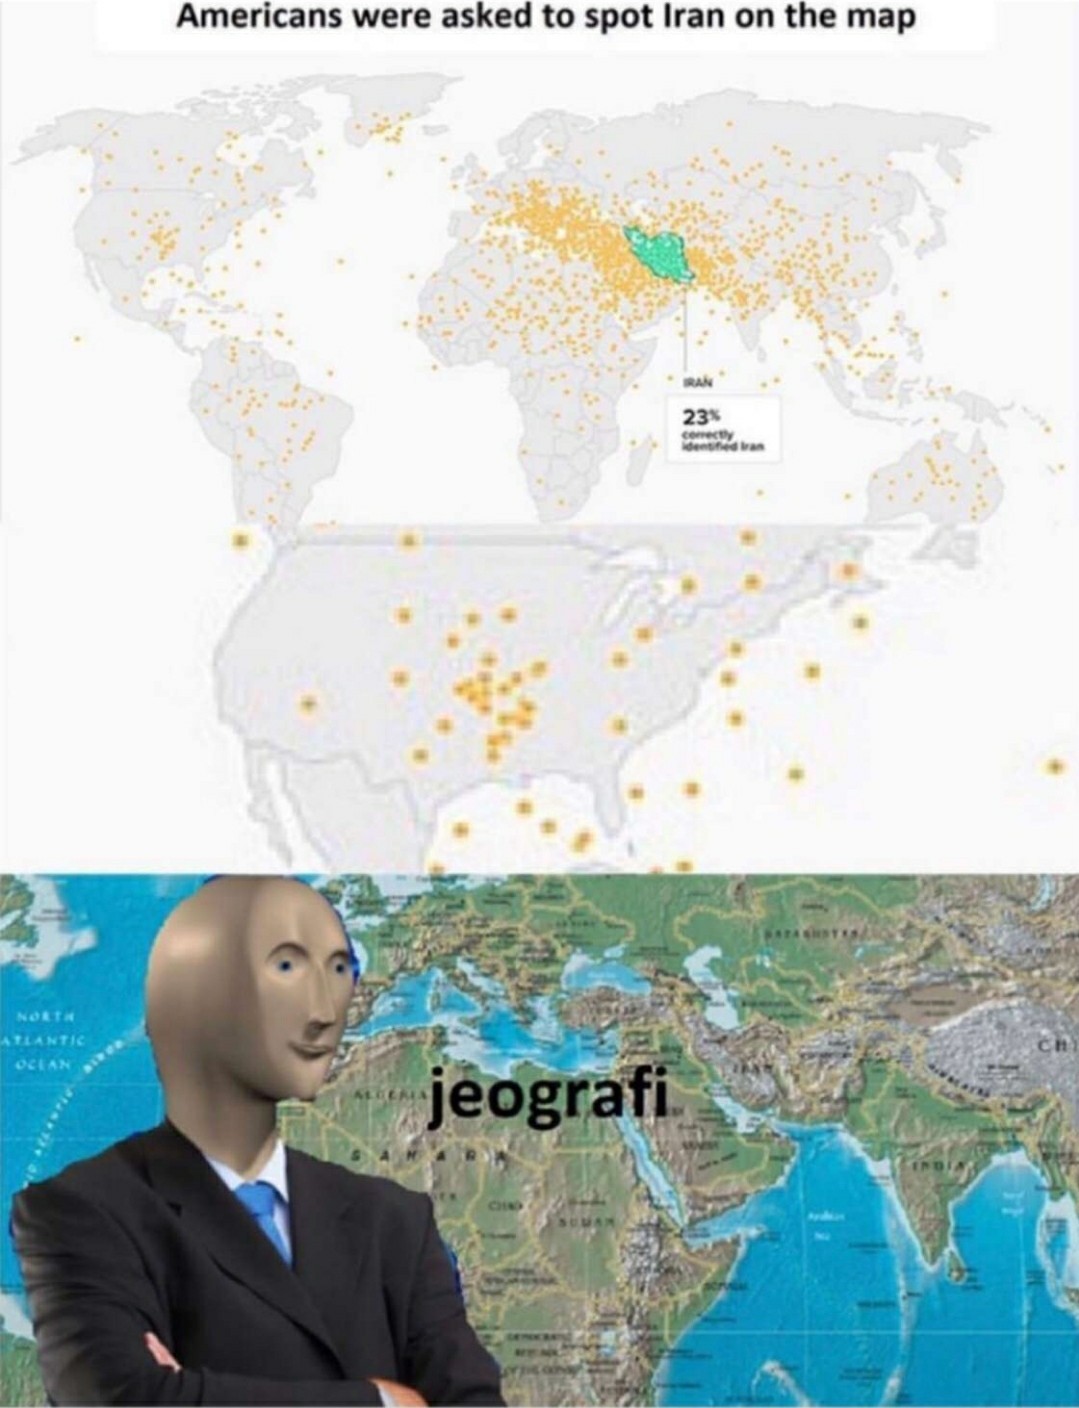 Jeografi - meme